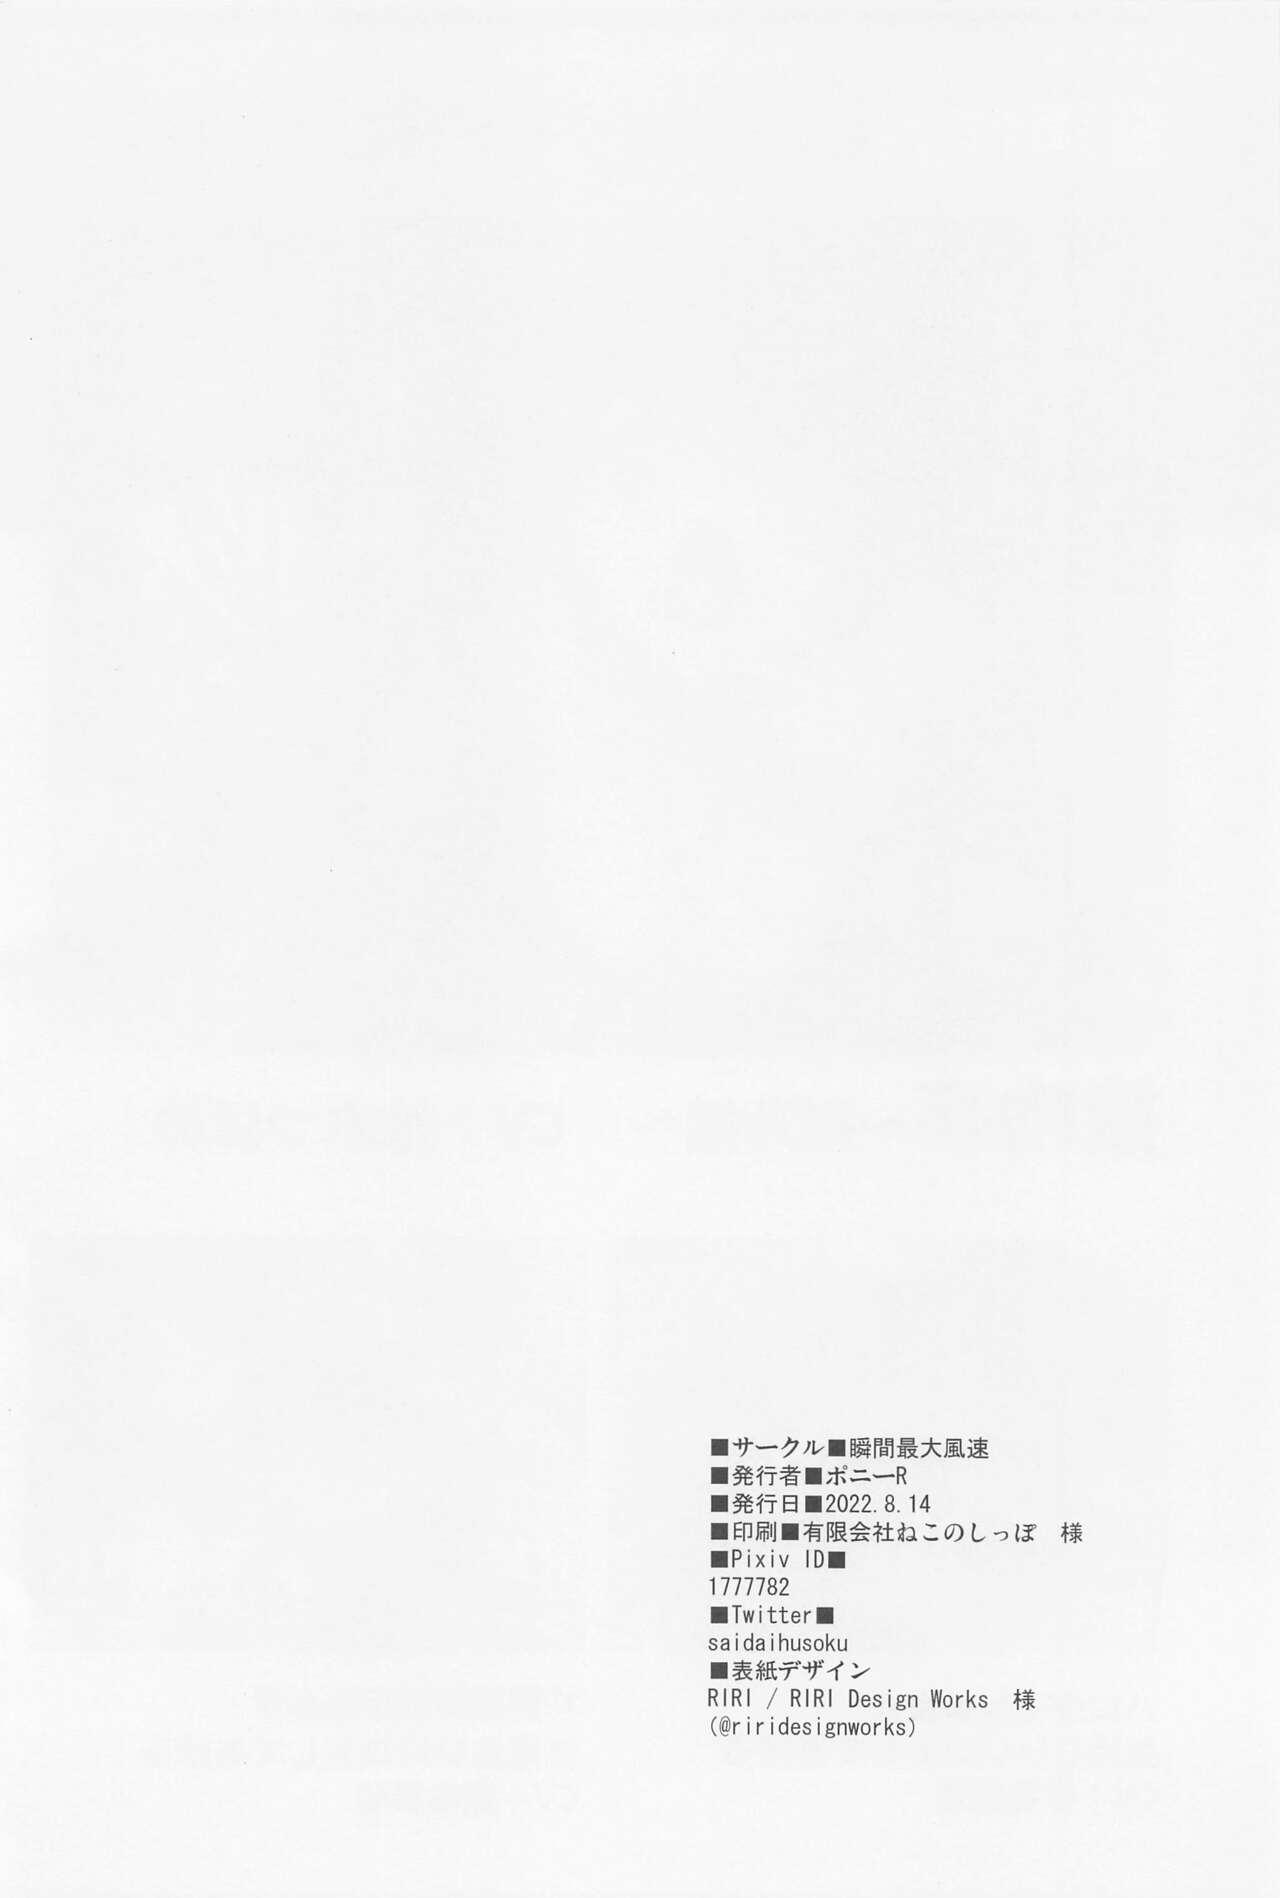 Teens okuchisukebekaranonokokisuhamesoshuhen - Fate grand order Corno - Page 105